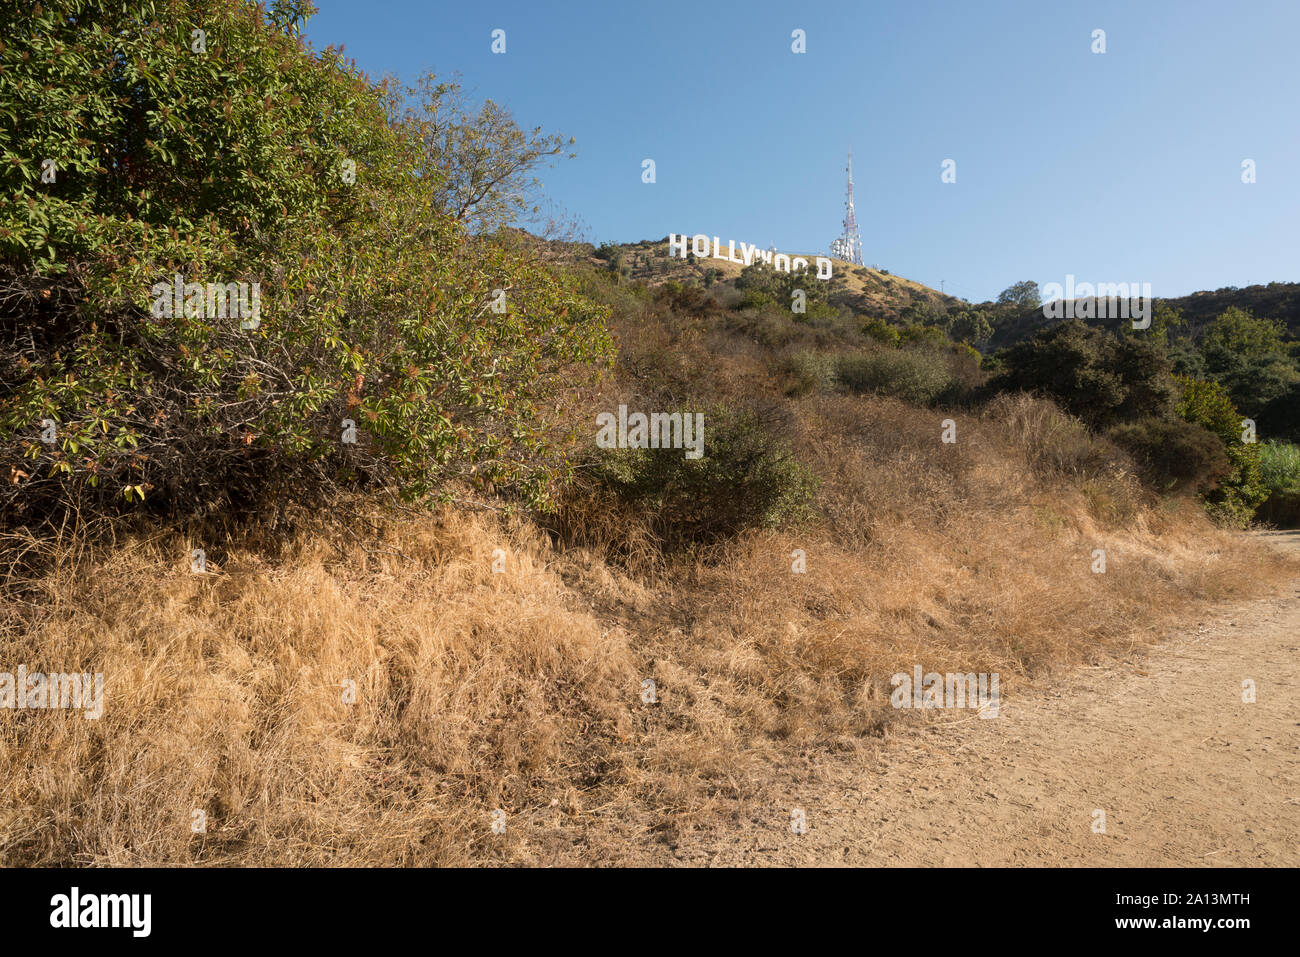 Hollywood Hills, Los Angeles California Stock Photo